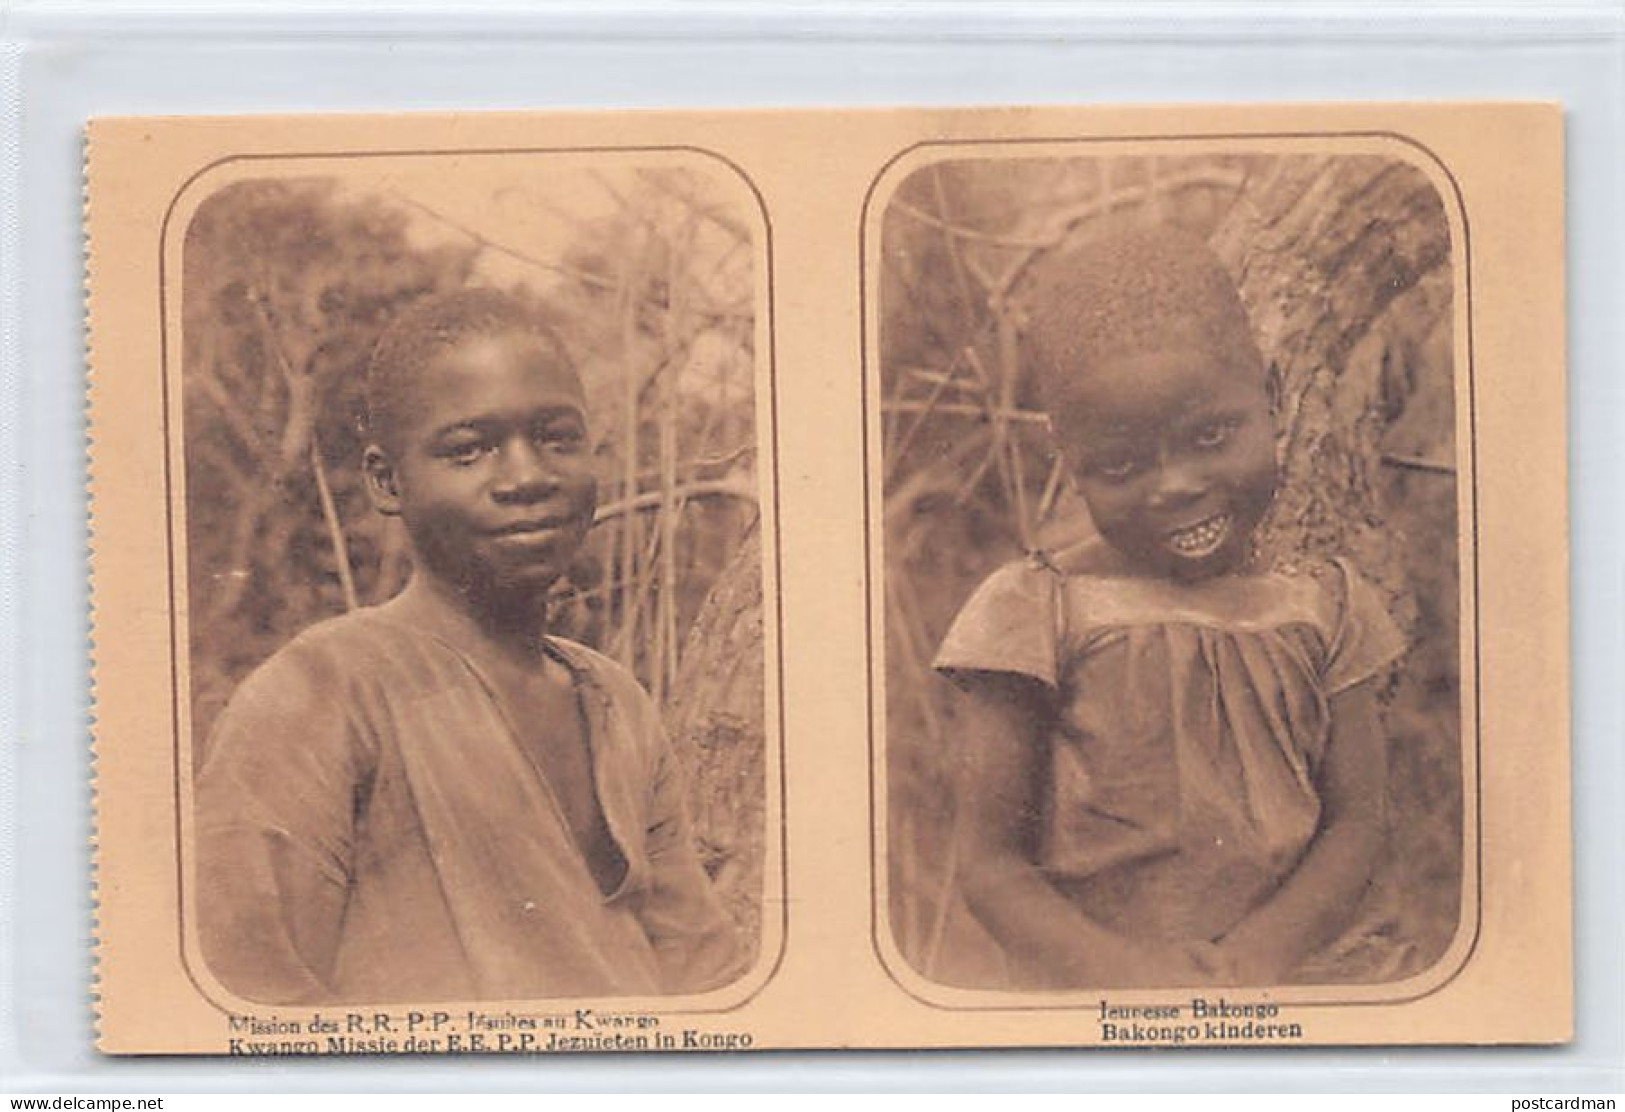 CONGO KINSHASA - Jeunesse Bakongo - Ed. Mission Des Jésuites Kwango  - Belgian Congo